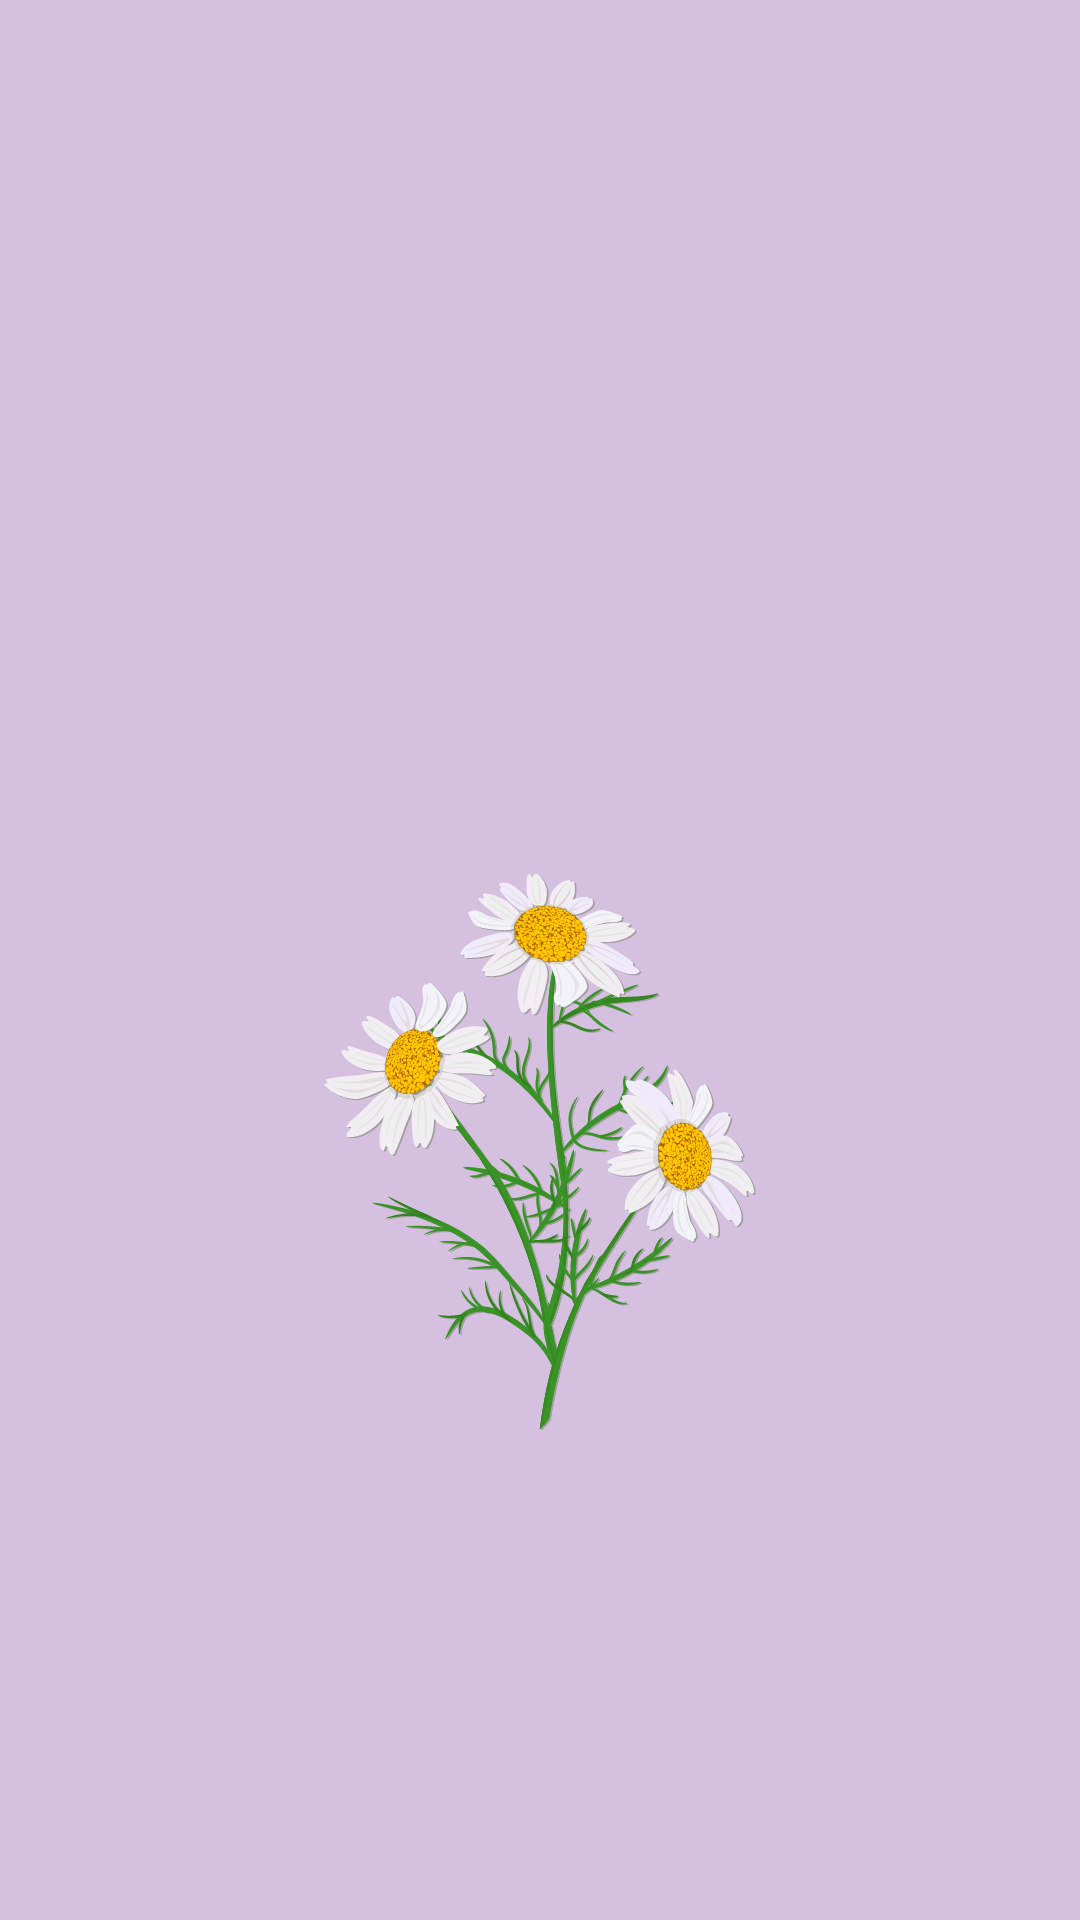 A daisy on purple background - Minimalist, phone, spring, daisy, pretty, cute